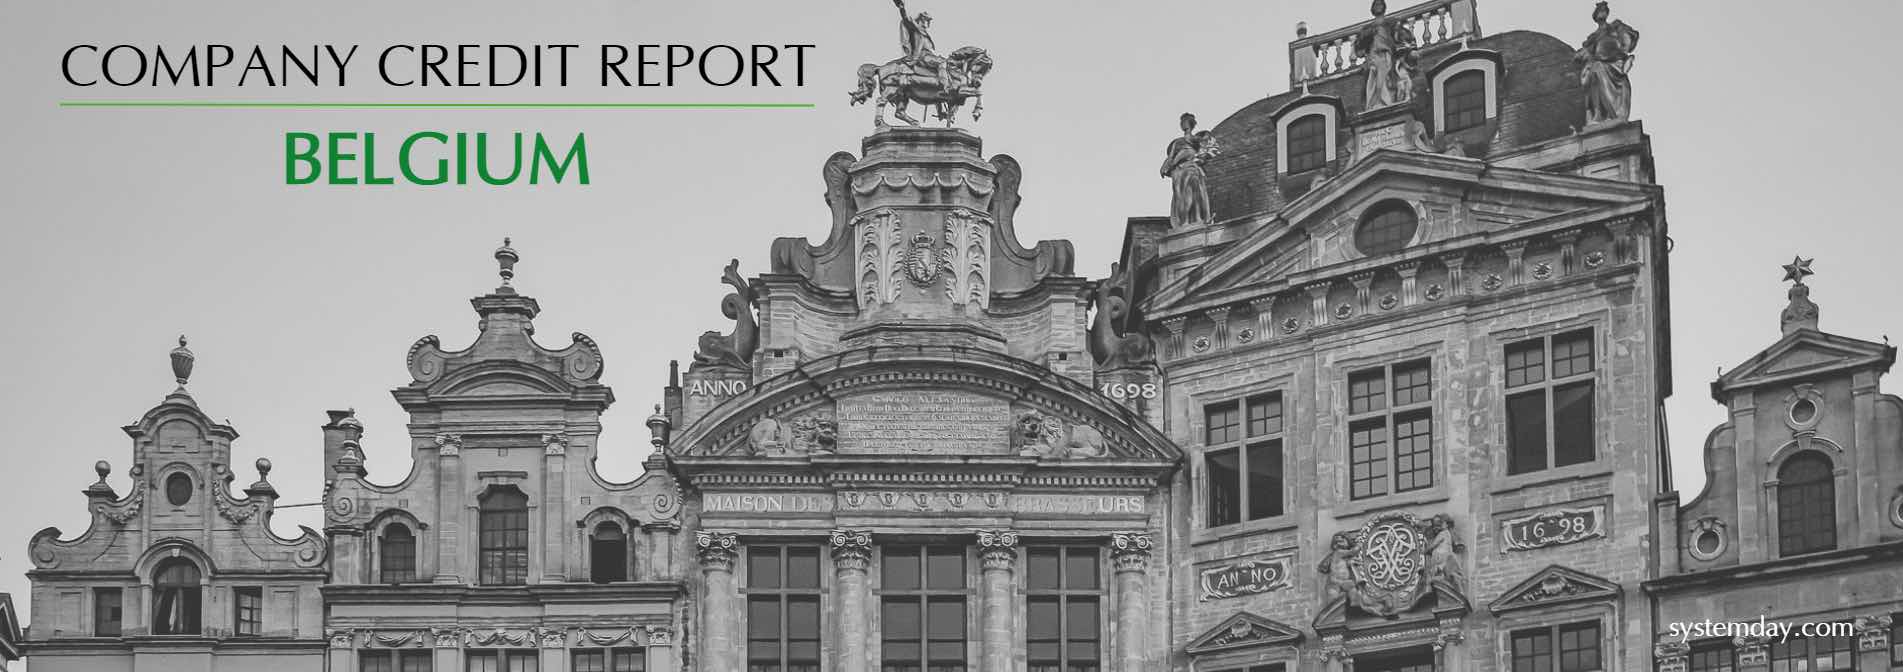 Belgium Company Credit Report